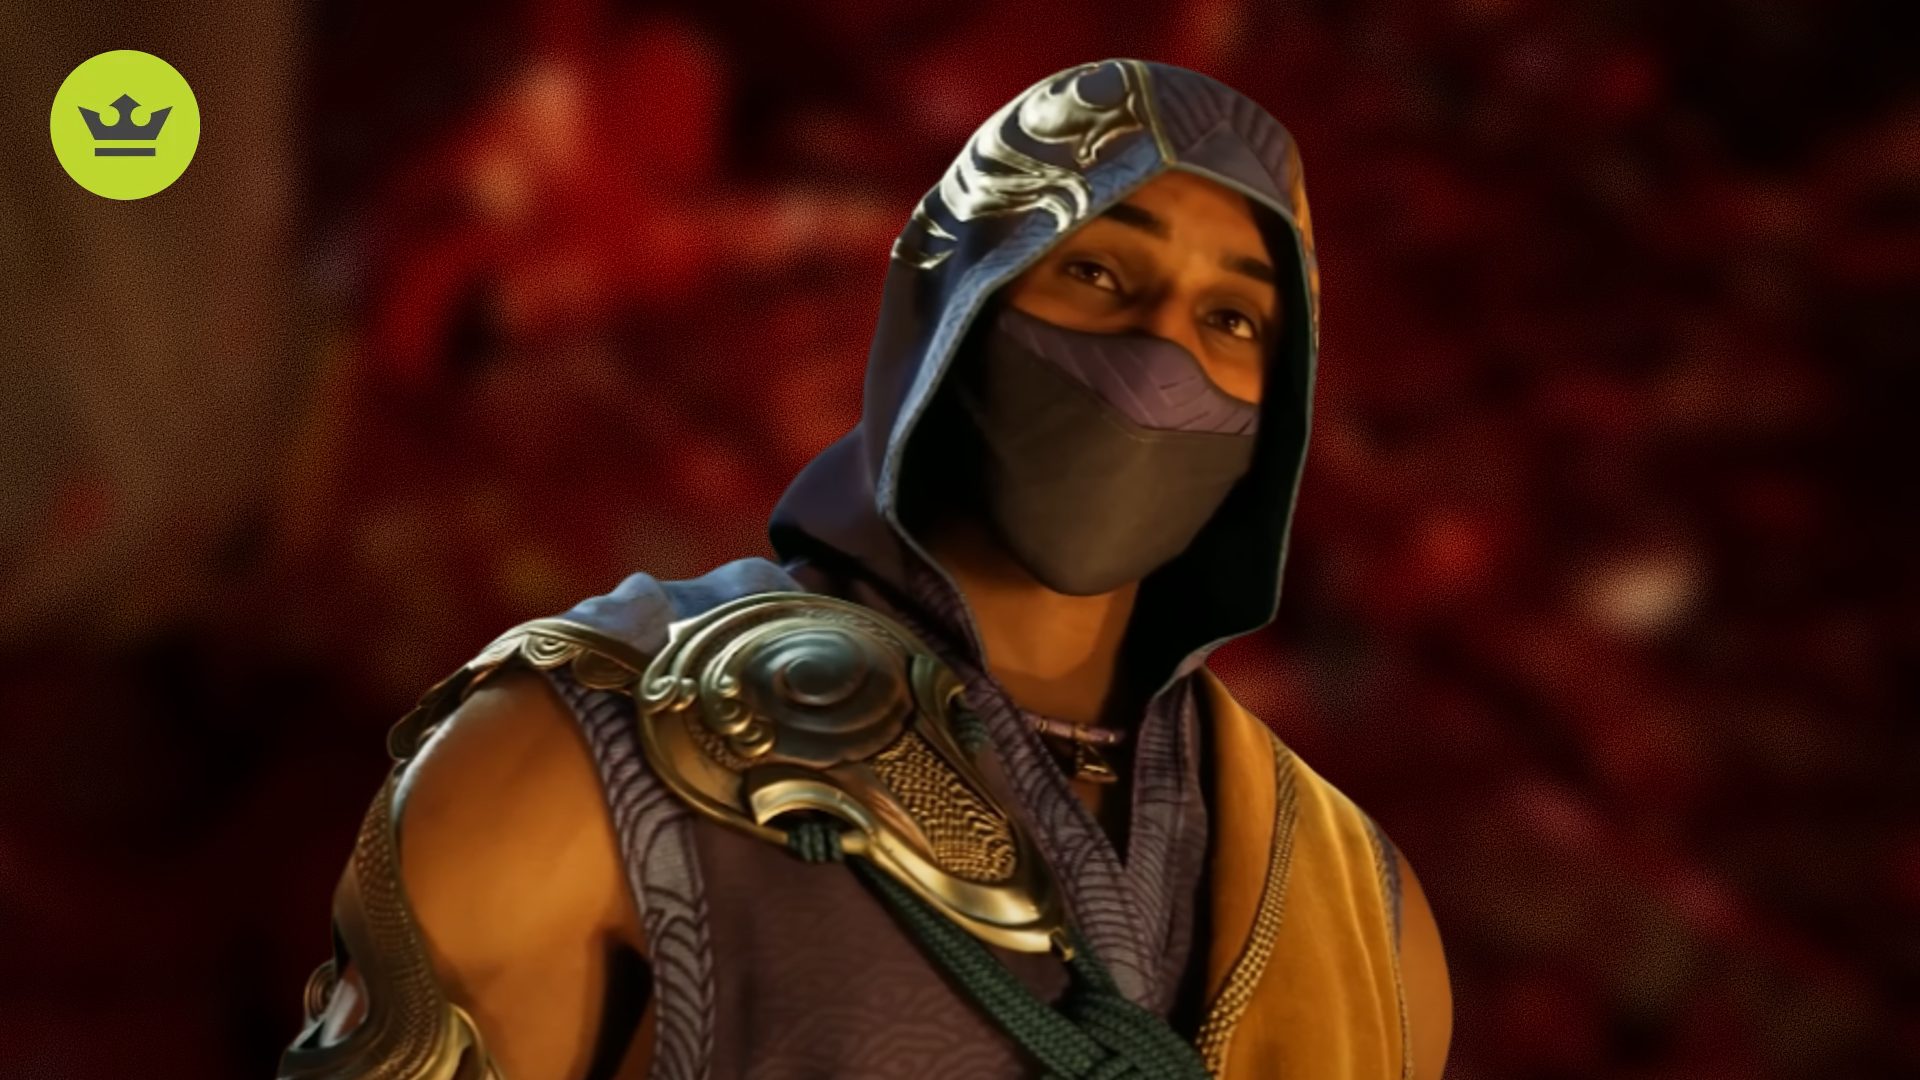 Mortal Kombat 1 Characters: Rain can be seen